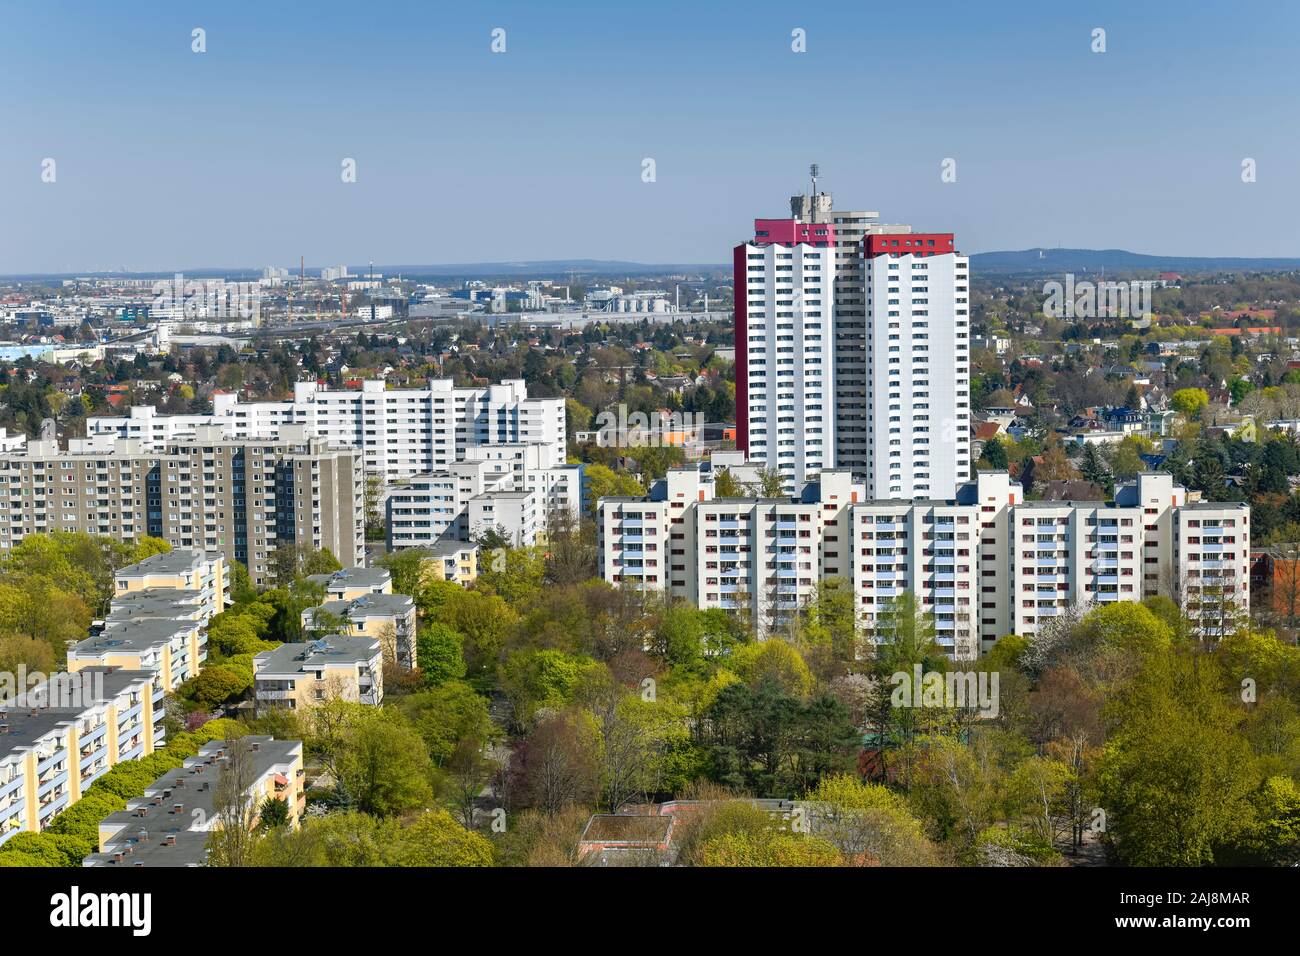 Wohnhäuser, Zwickauer Damm, Gropiusstadt, Neukölln, Berlin, Deutschland Stock Photo